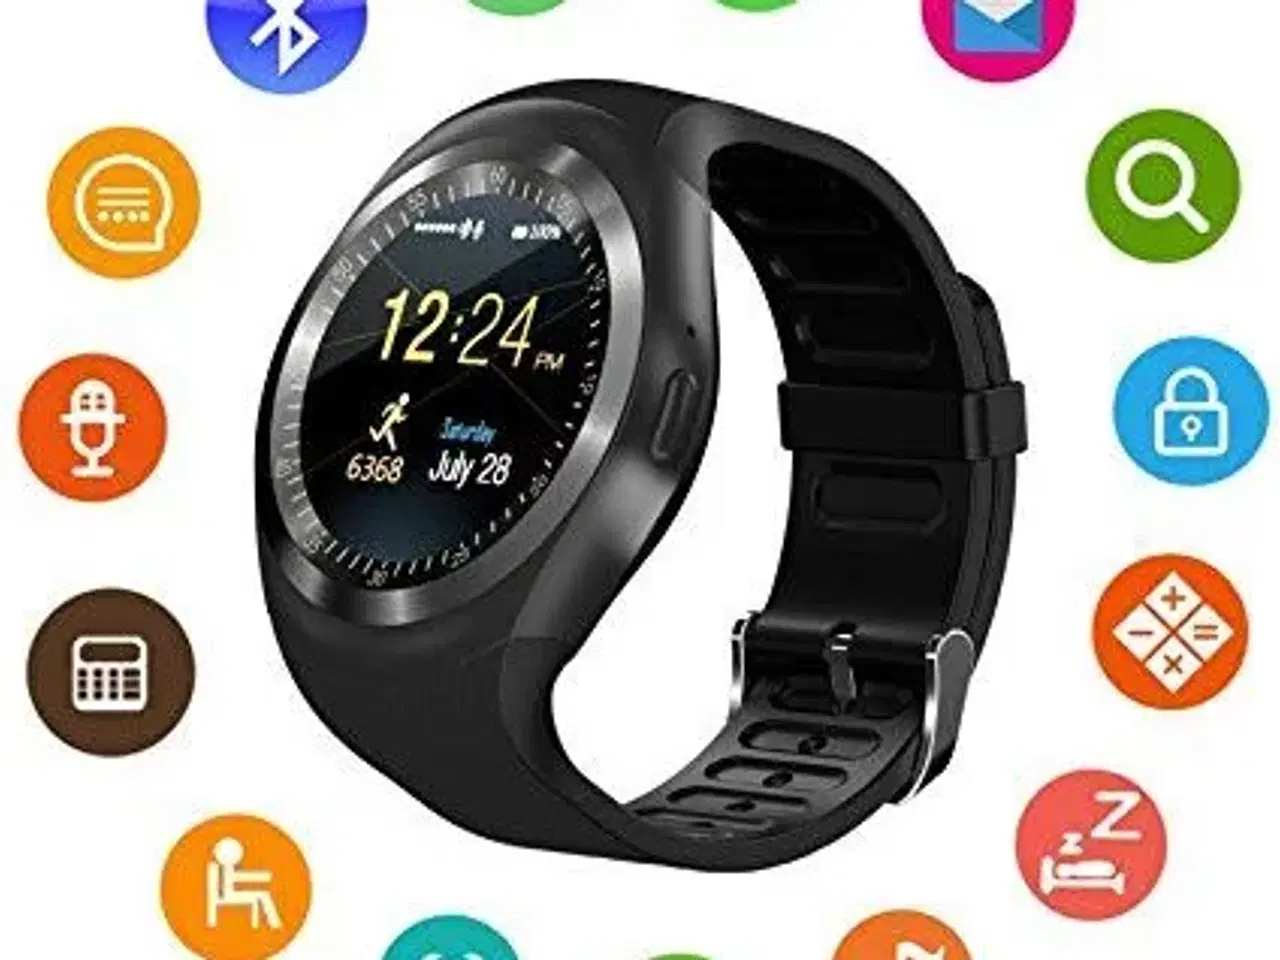 Billede 1 - Y1 smartwatch 2018 model!